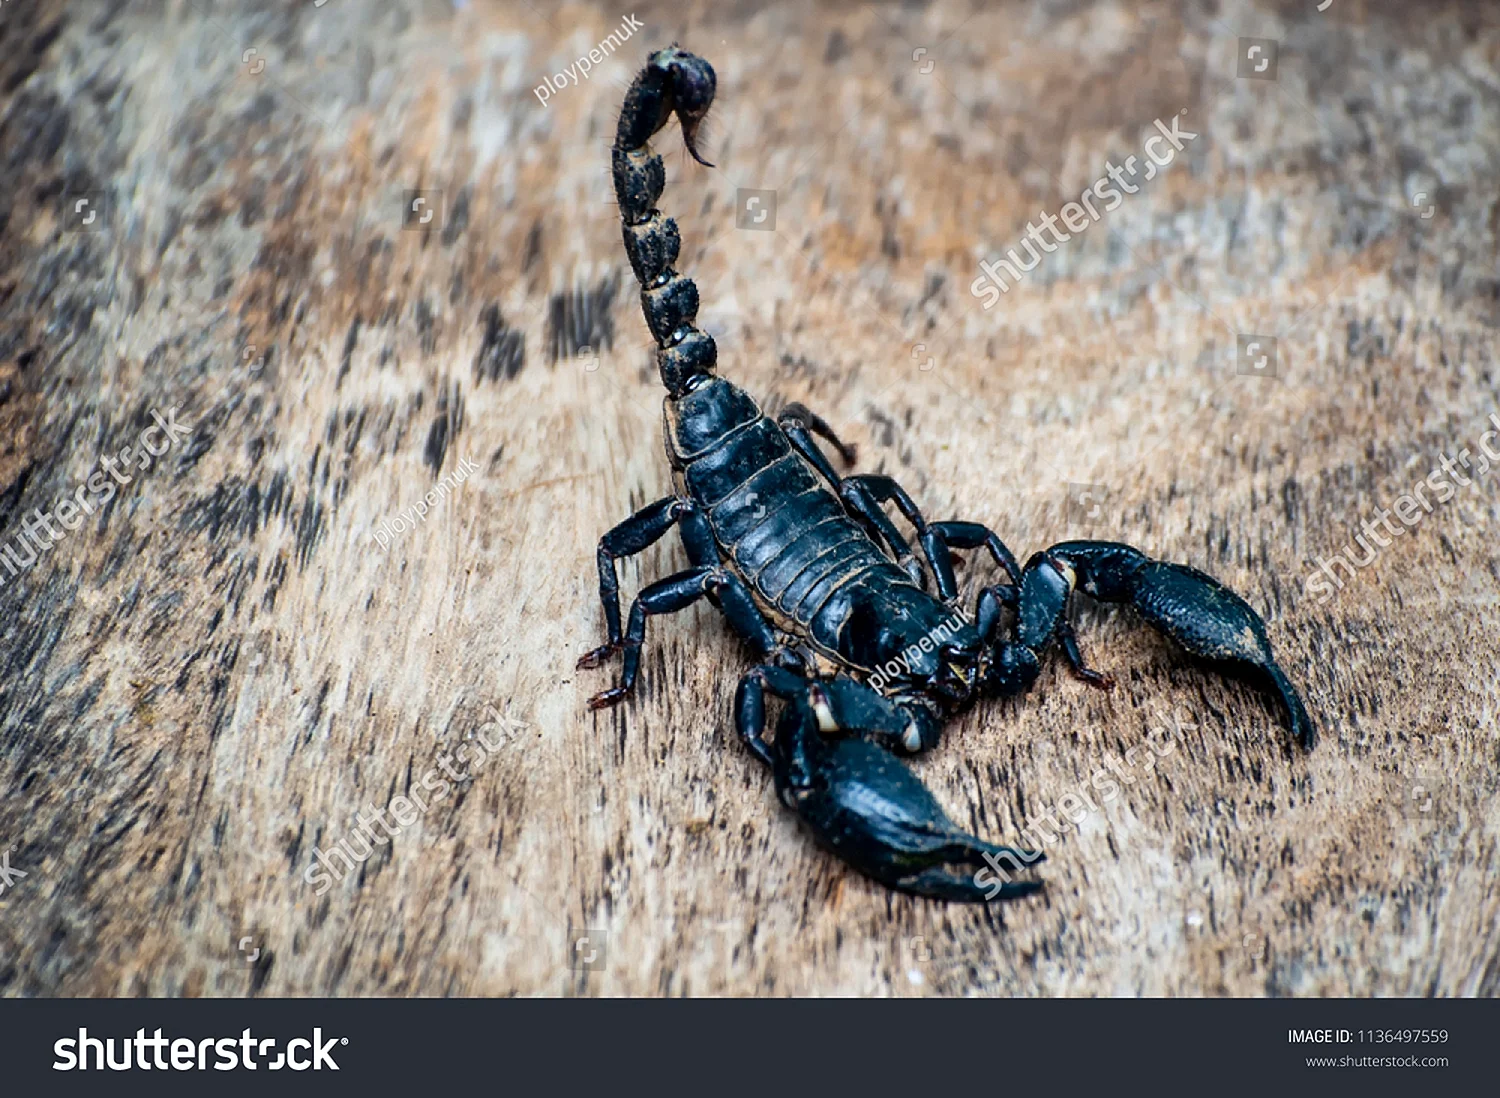 Скорпион Heterometrus cyaneus